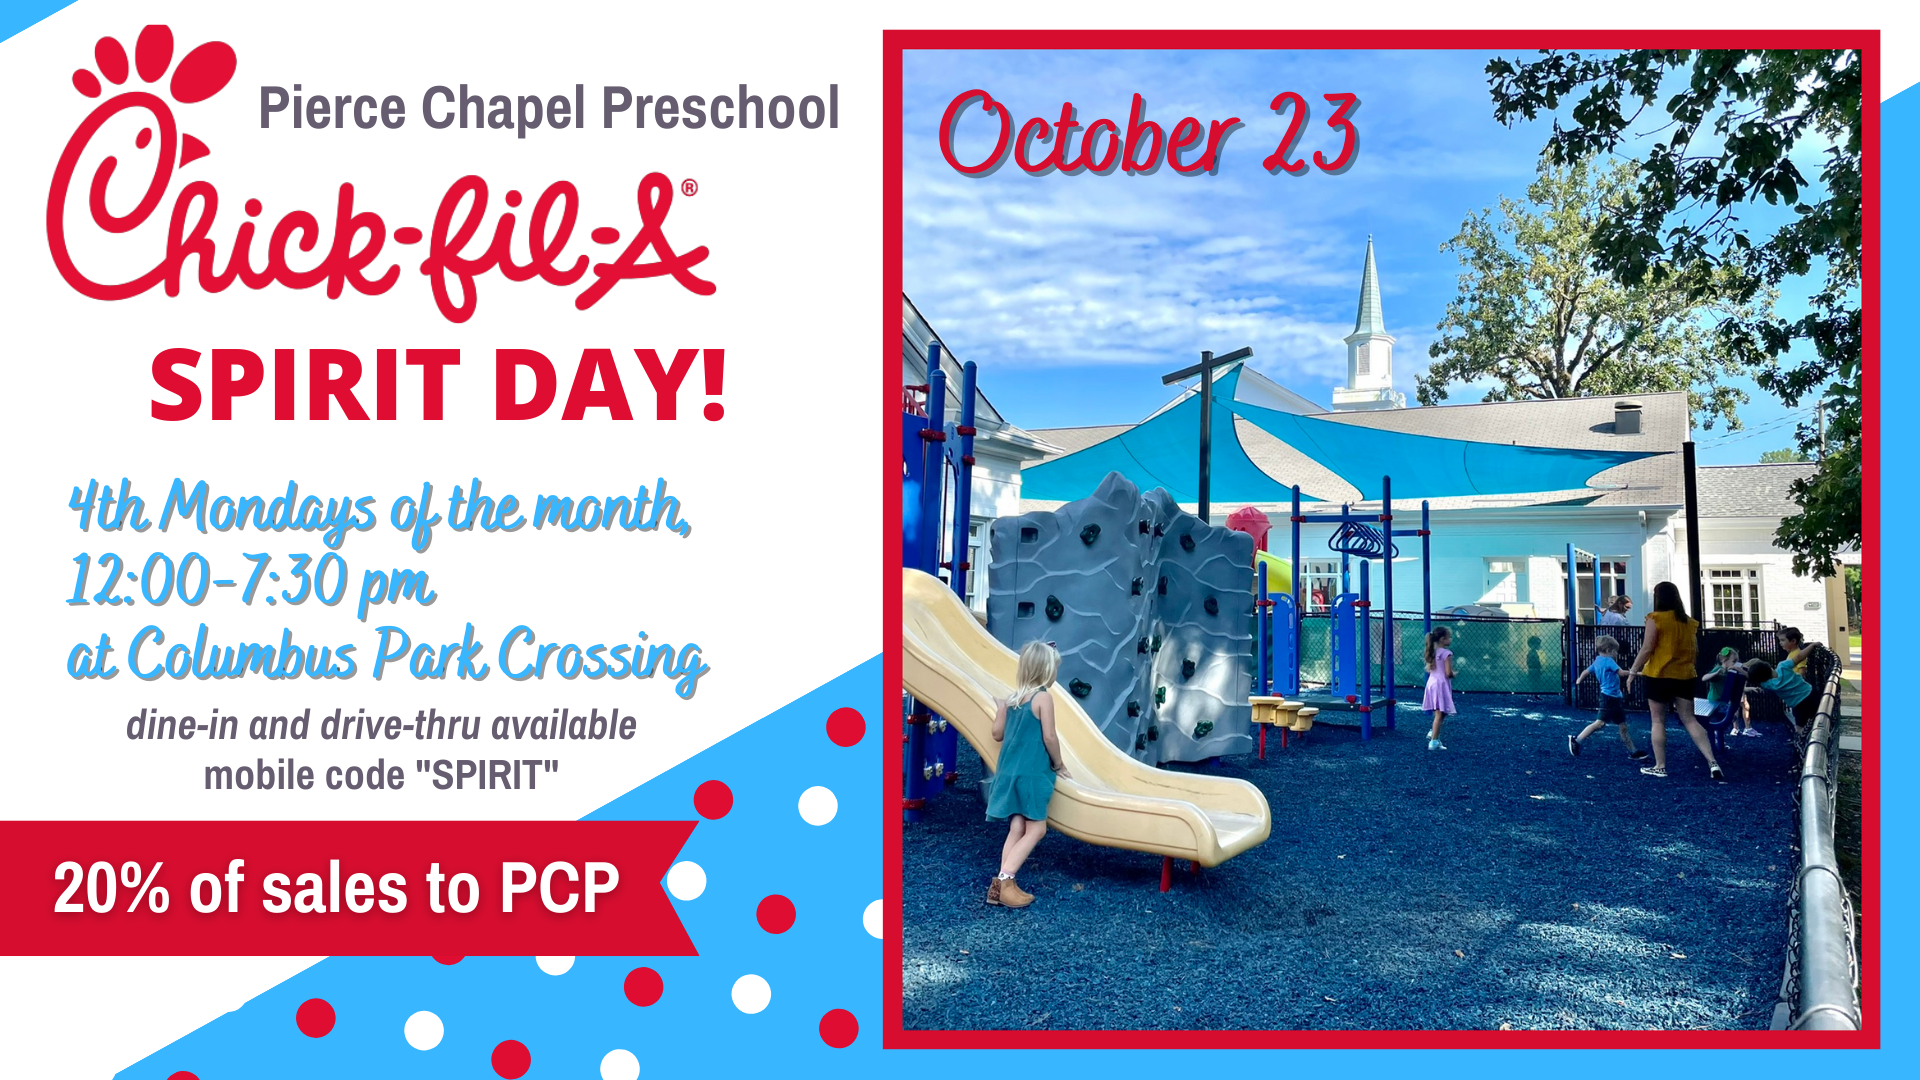 PC Preschool Chick-fil-A Spirit Day- Nov. 27 | Pierce Chapel